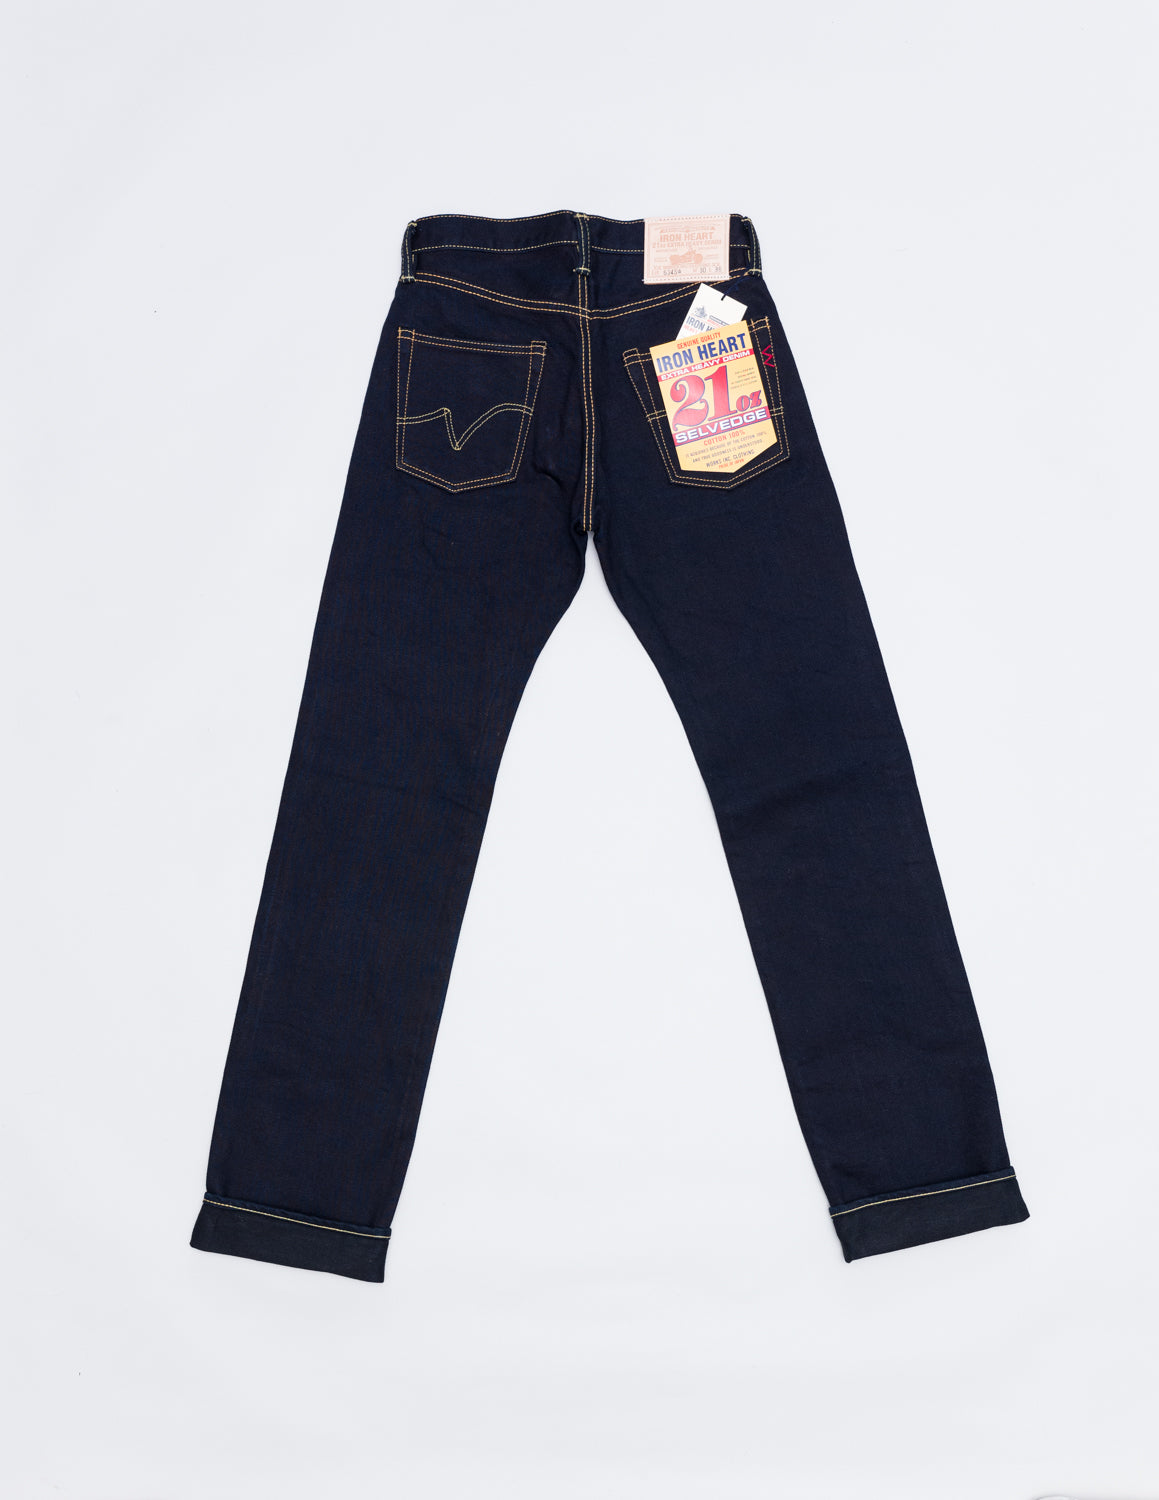 IH-634S-21ib - 21oz Selvedge Denim Straight Cut Jeans - Indigo/Black